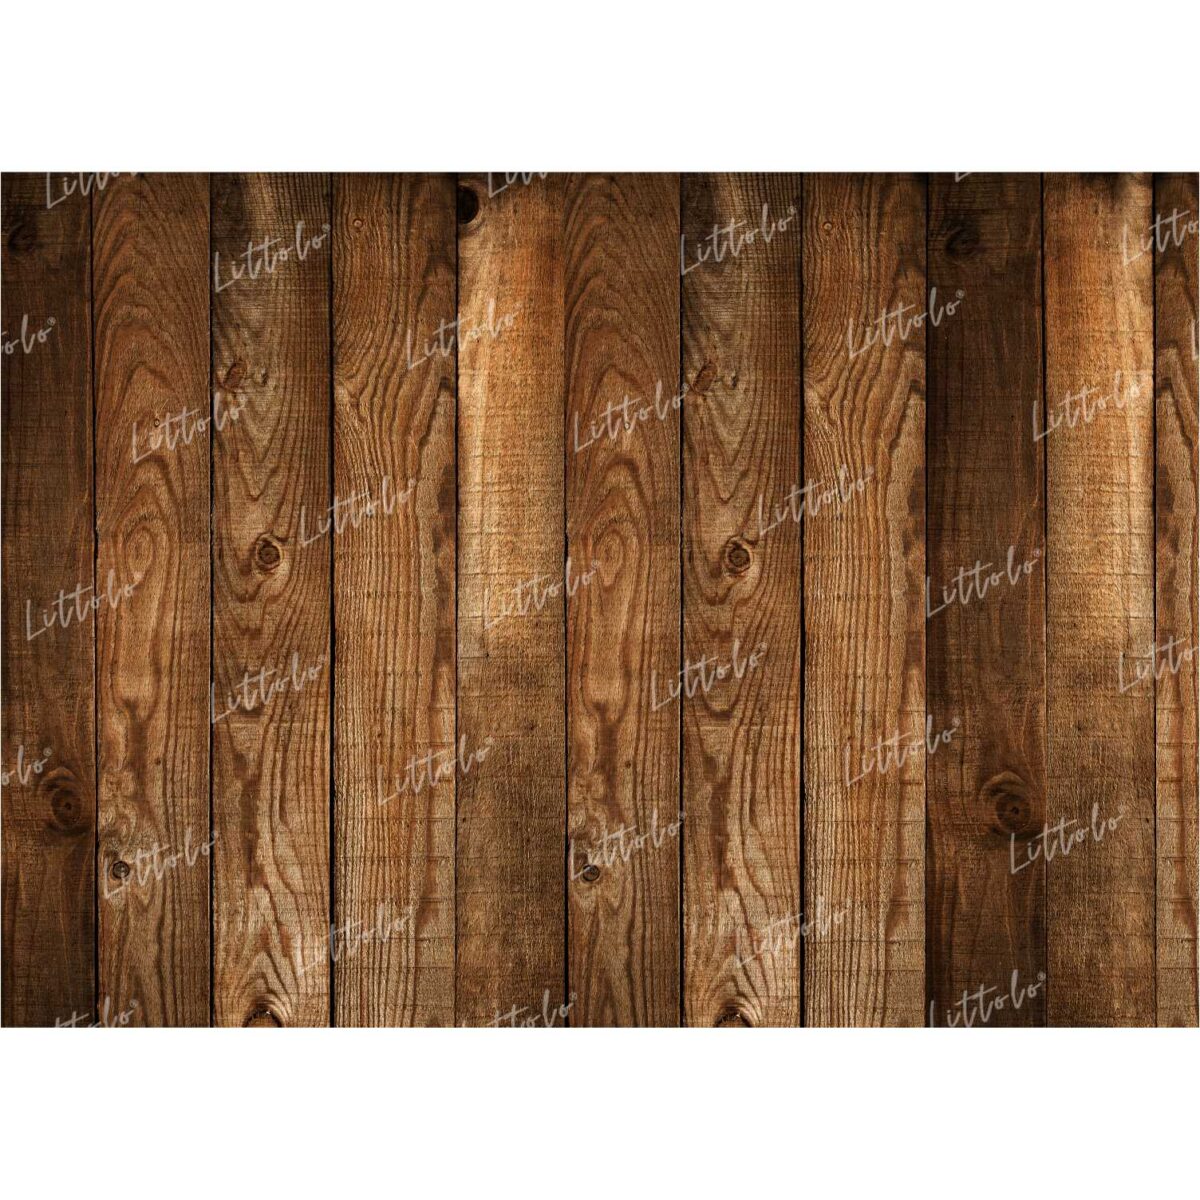 LB0015 Natural Wood Planks Backdrop